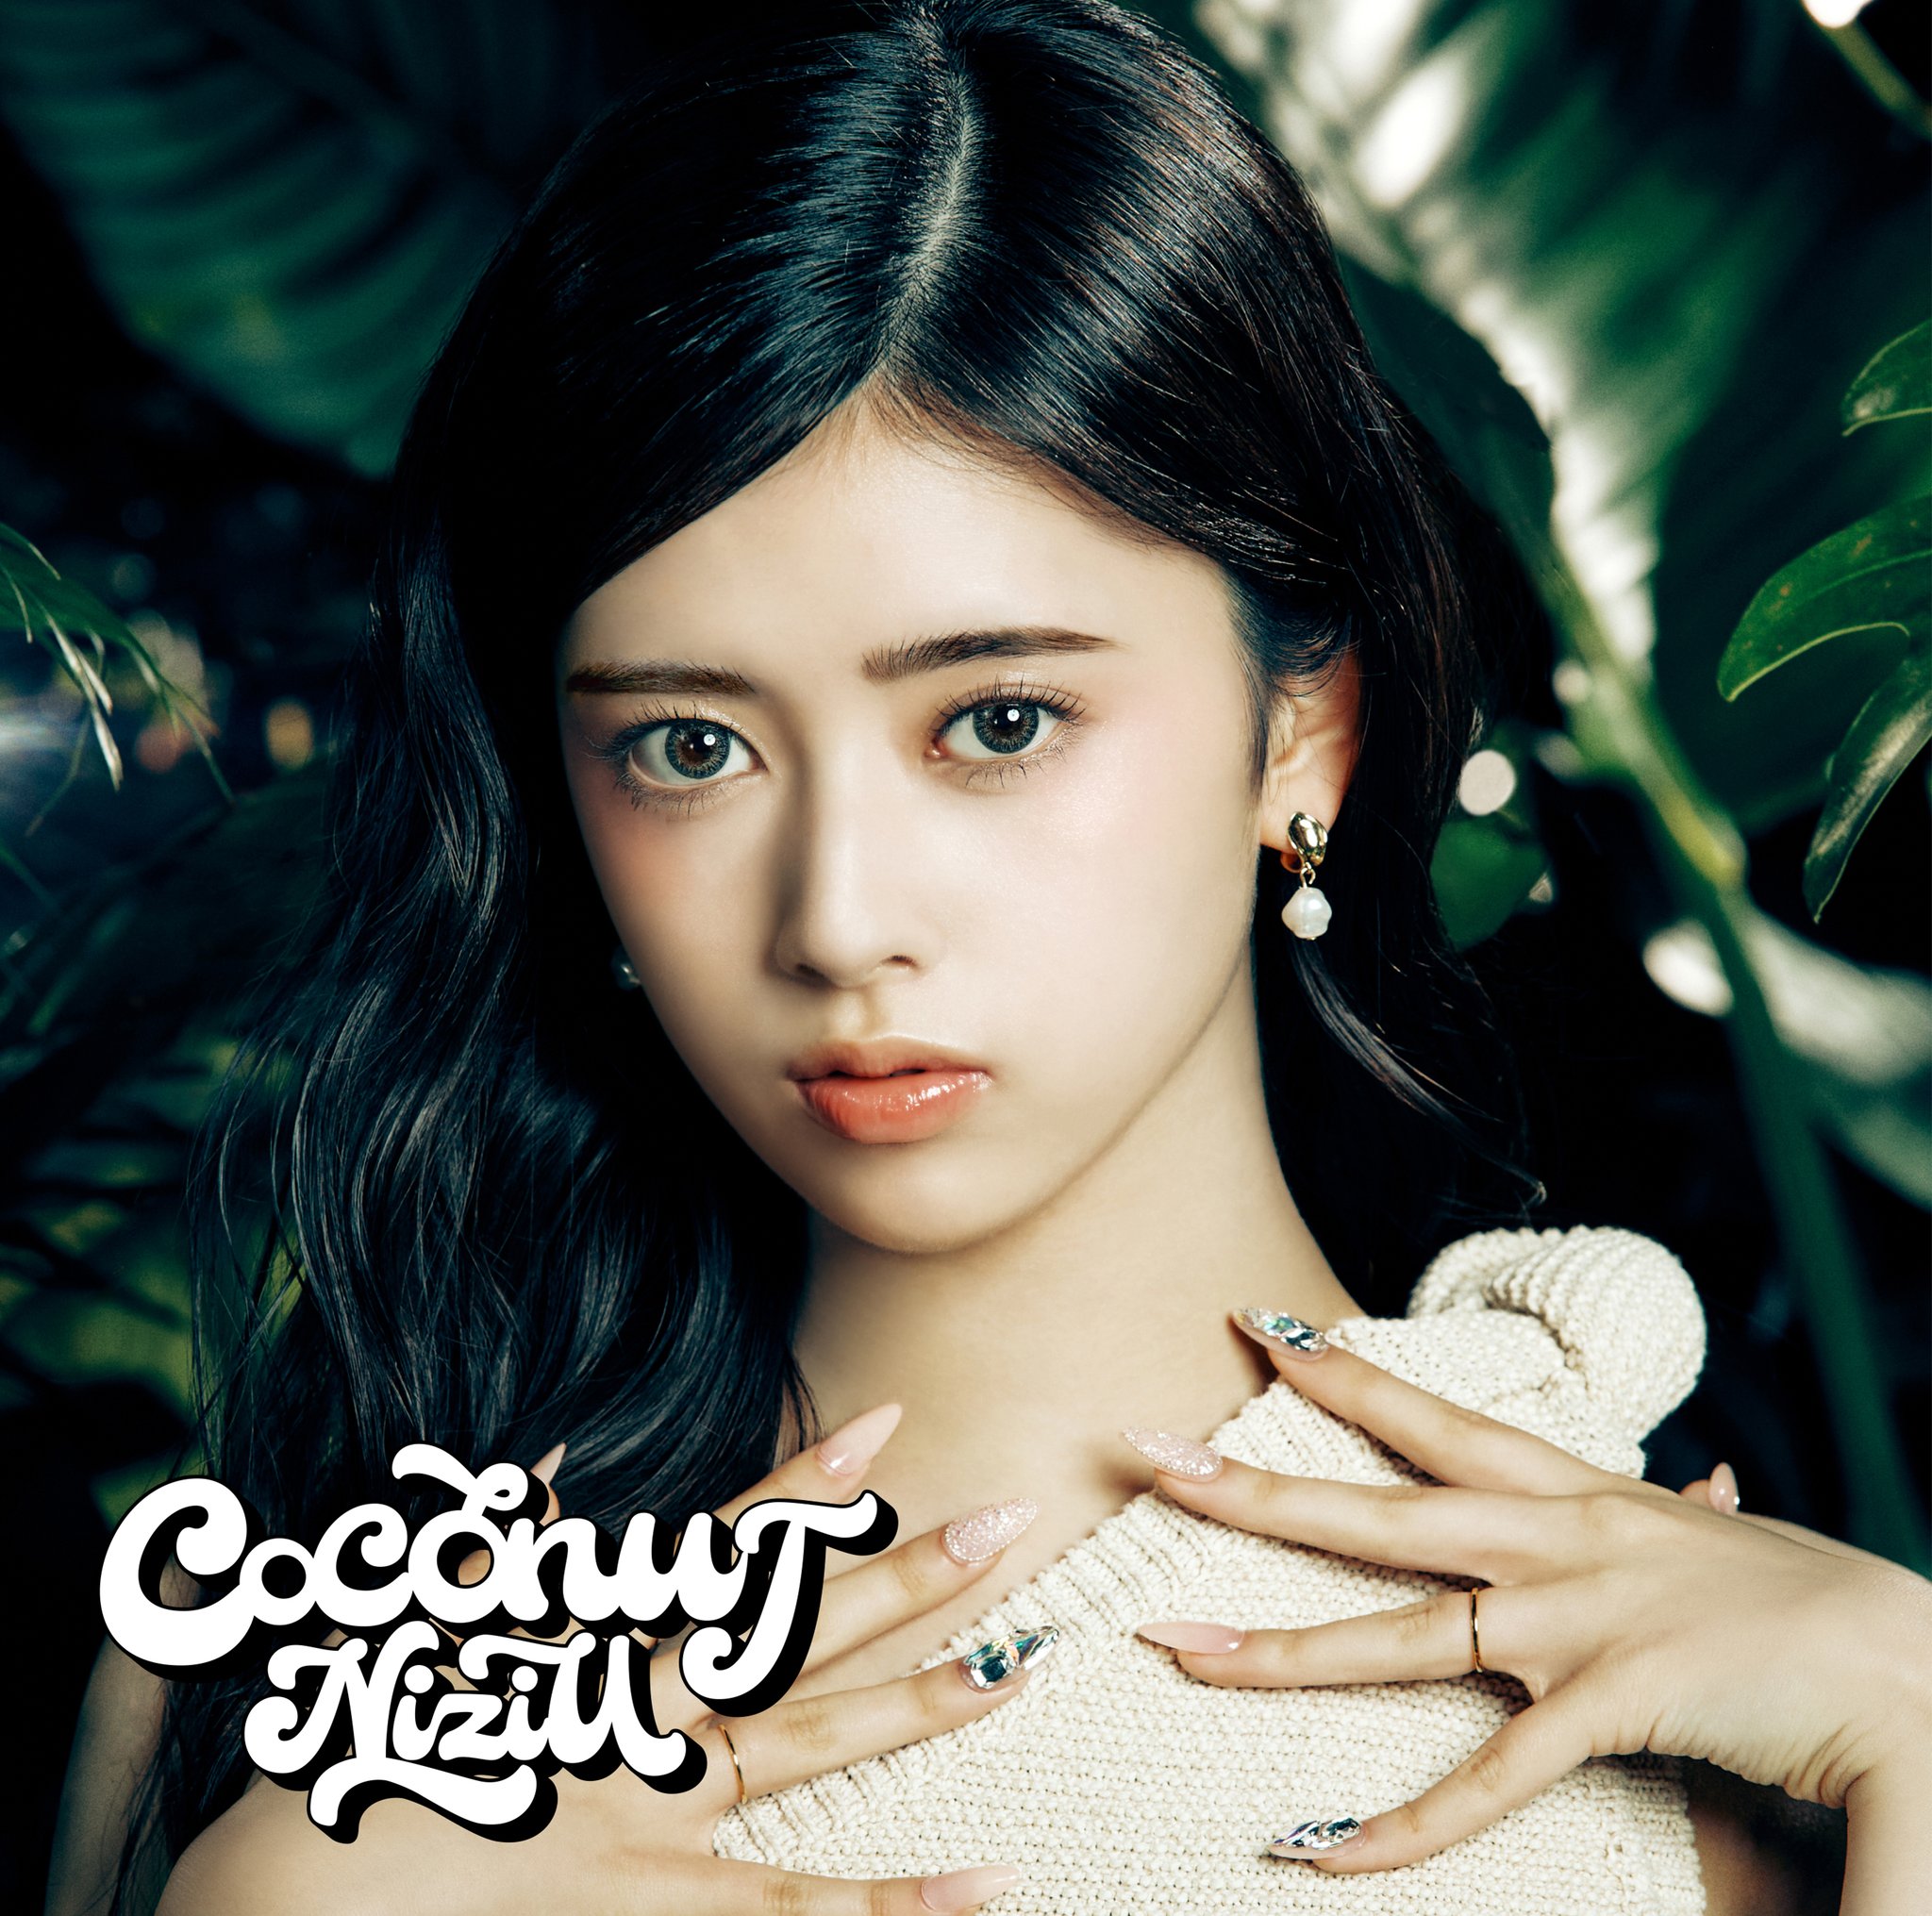 Niziu 'COCONUT' 2nd Album - NiziU Wallpaper (44947155) - Fanpop